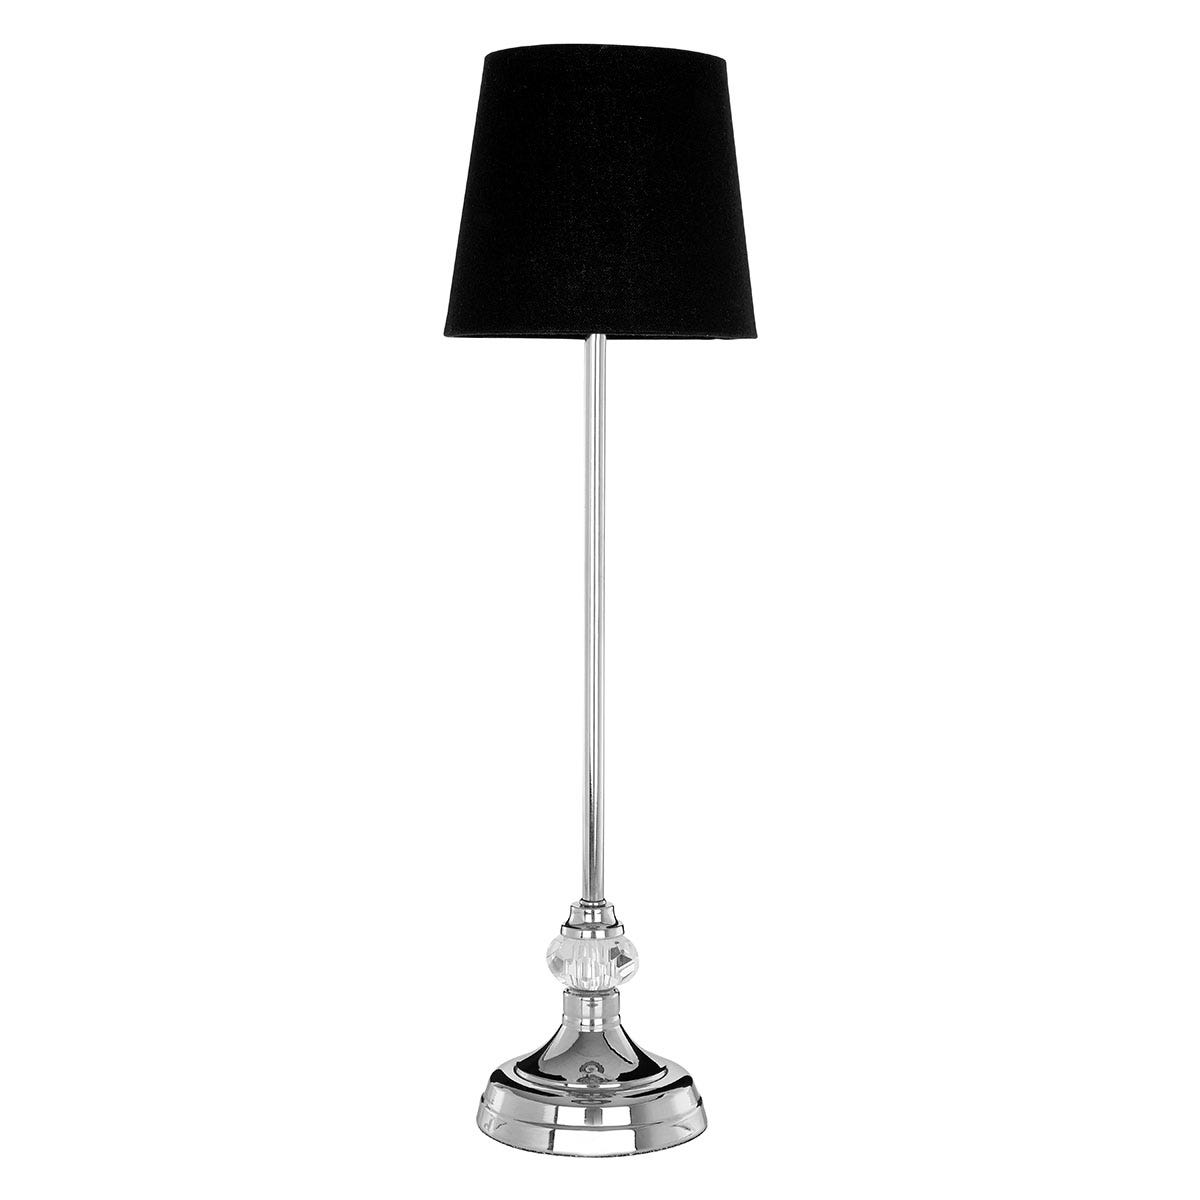 Premier Housewares Ursa Table Lamp with Black Shade